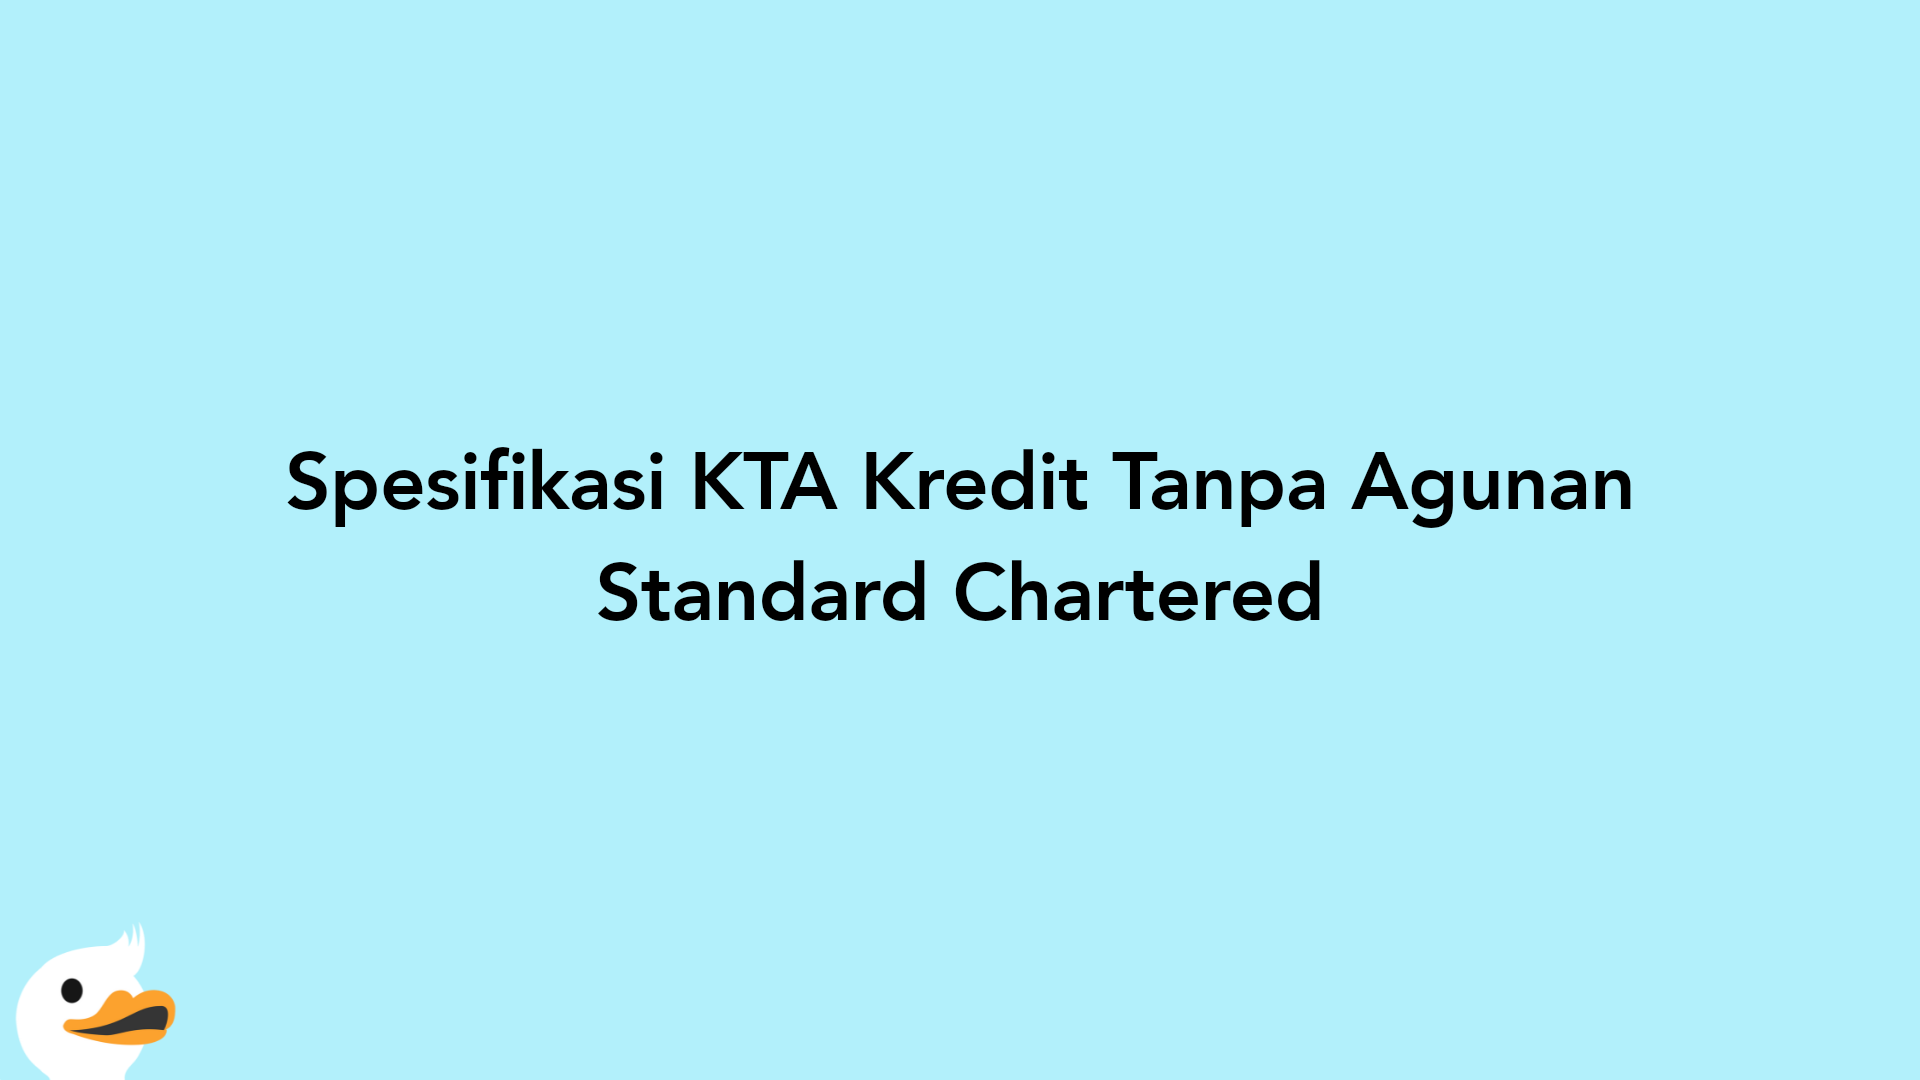 Spesifikasi KTA Kredit Tanpa Agunan Standard Chartered